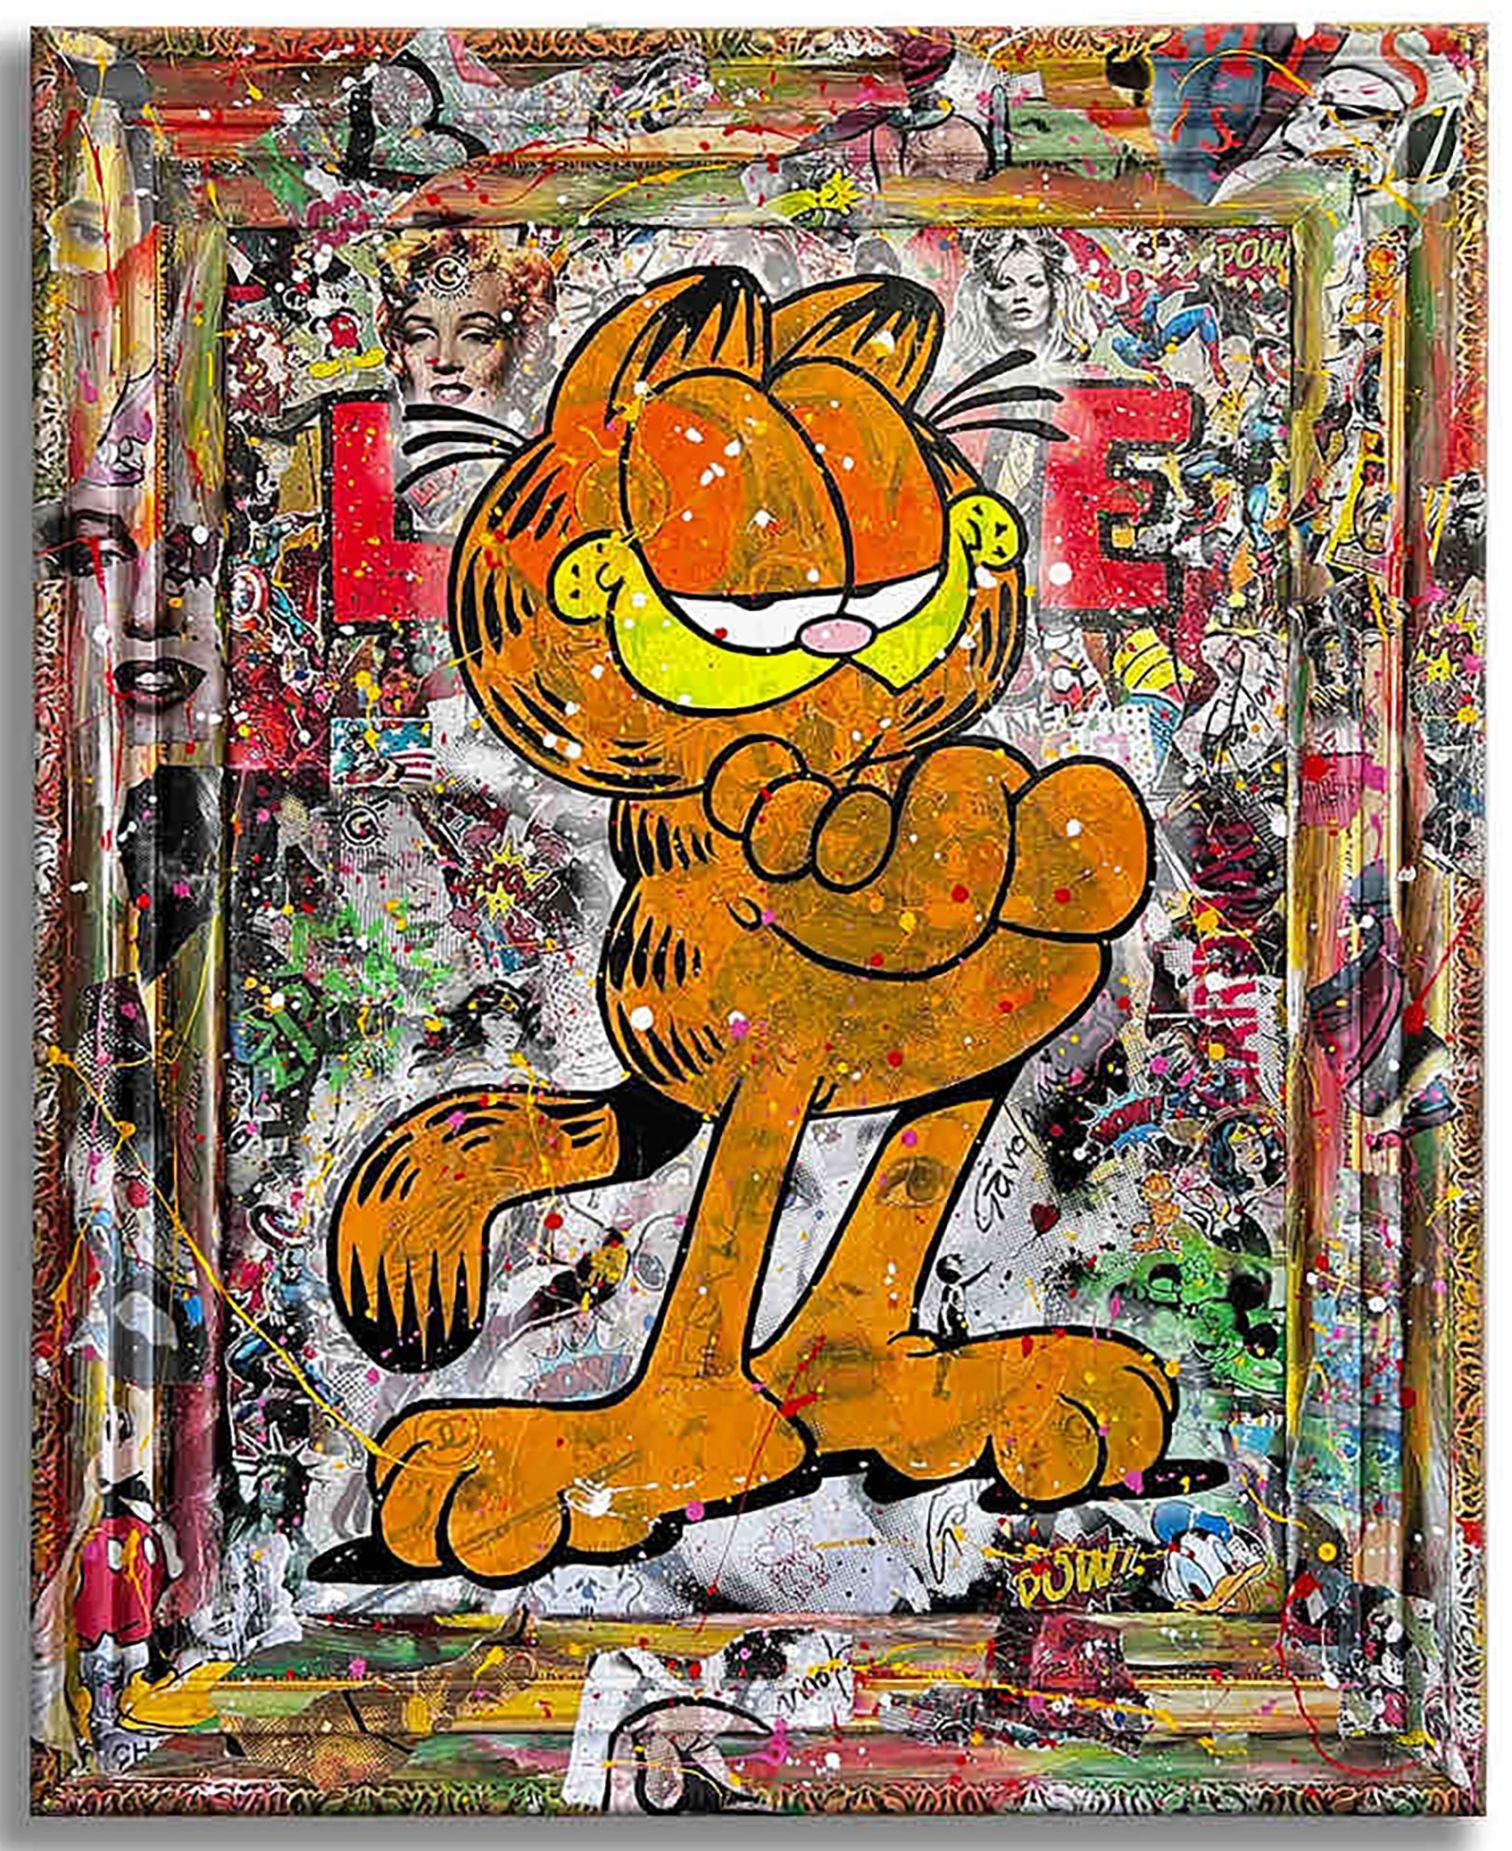 Garfield world â€“ Original Painting on Canvas, Painting, Acrylic on Canvas